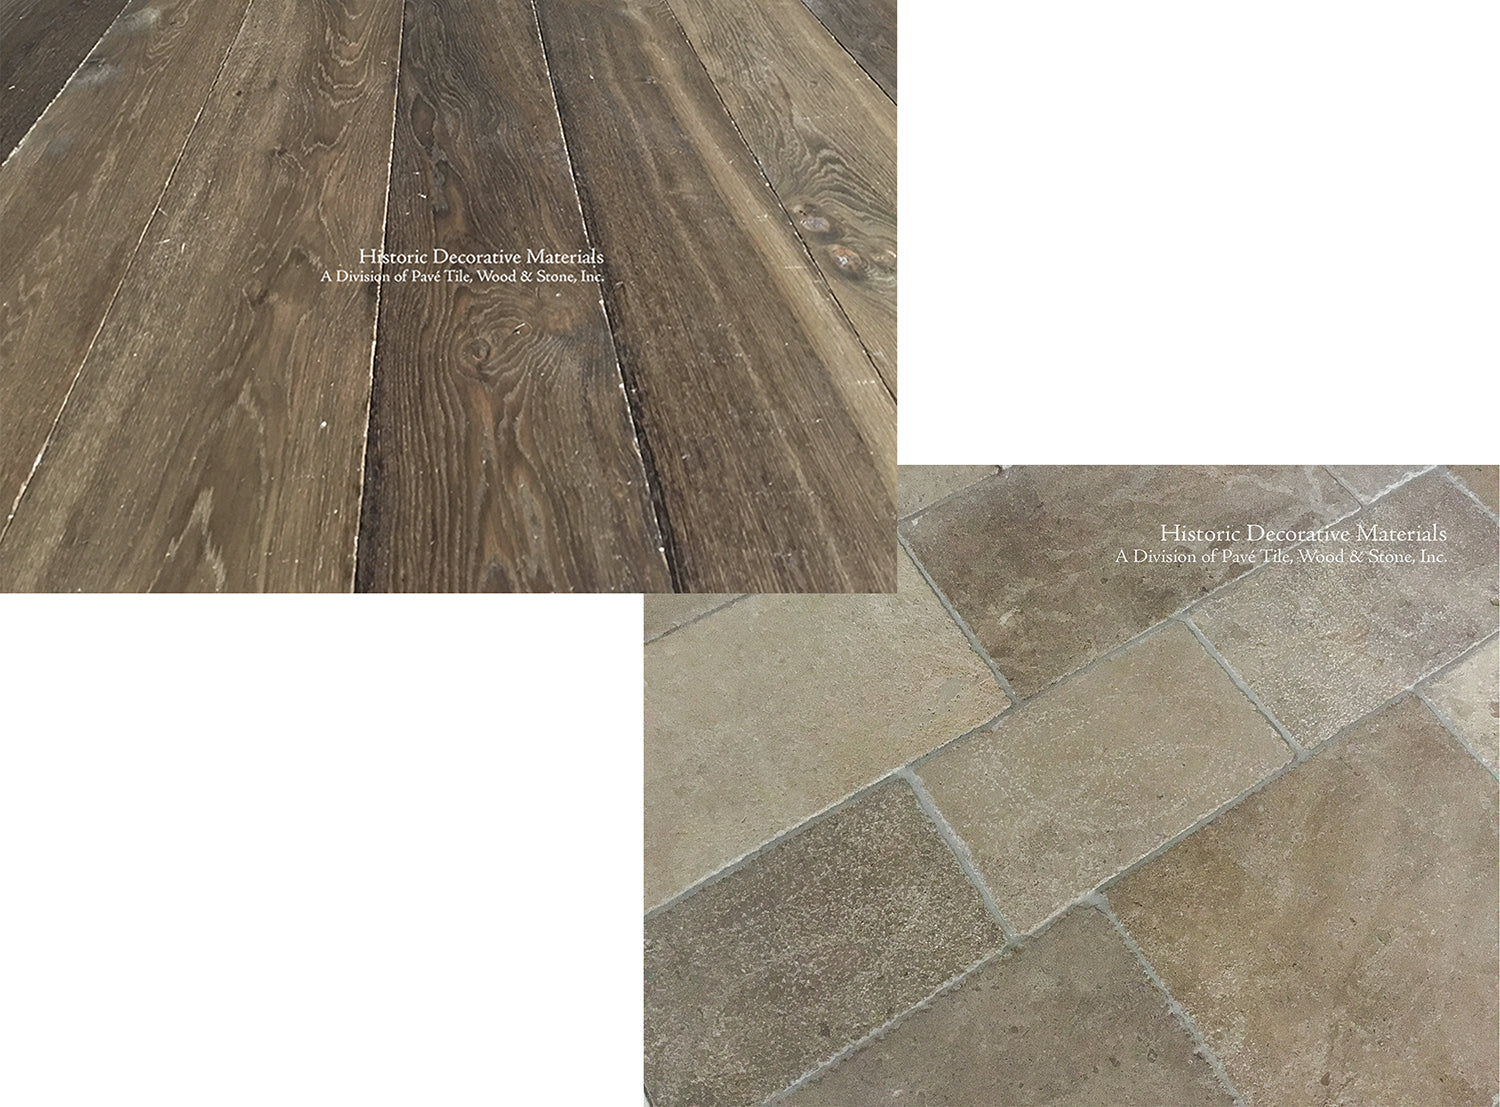 French Limestone Flooring and French Oak Flooring